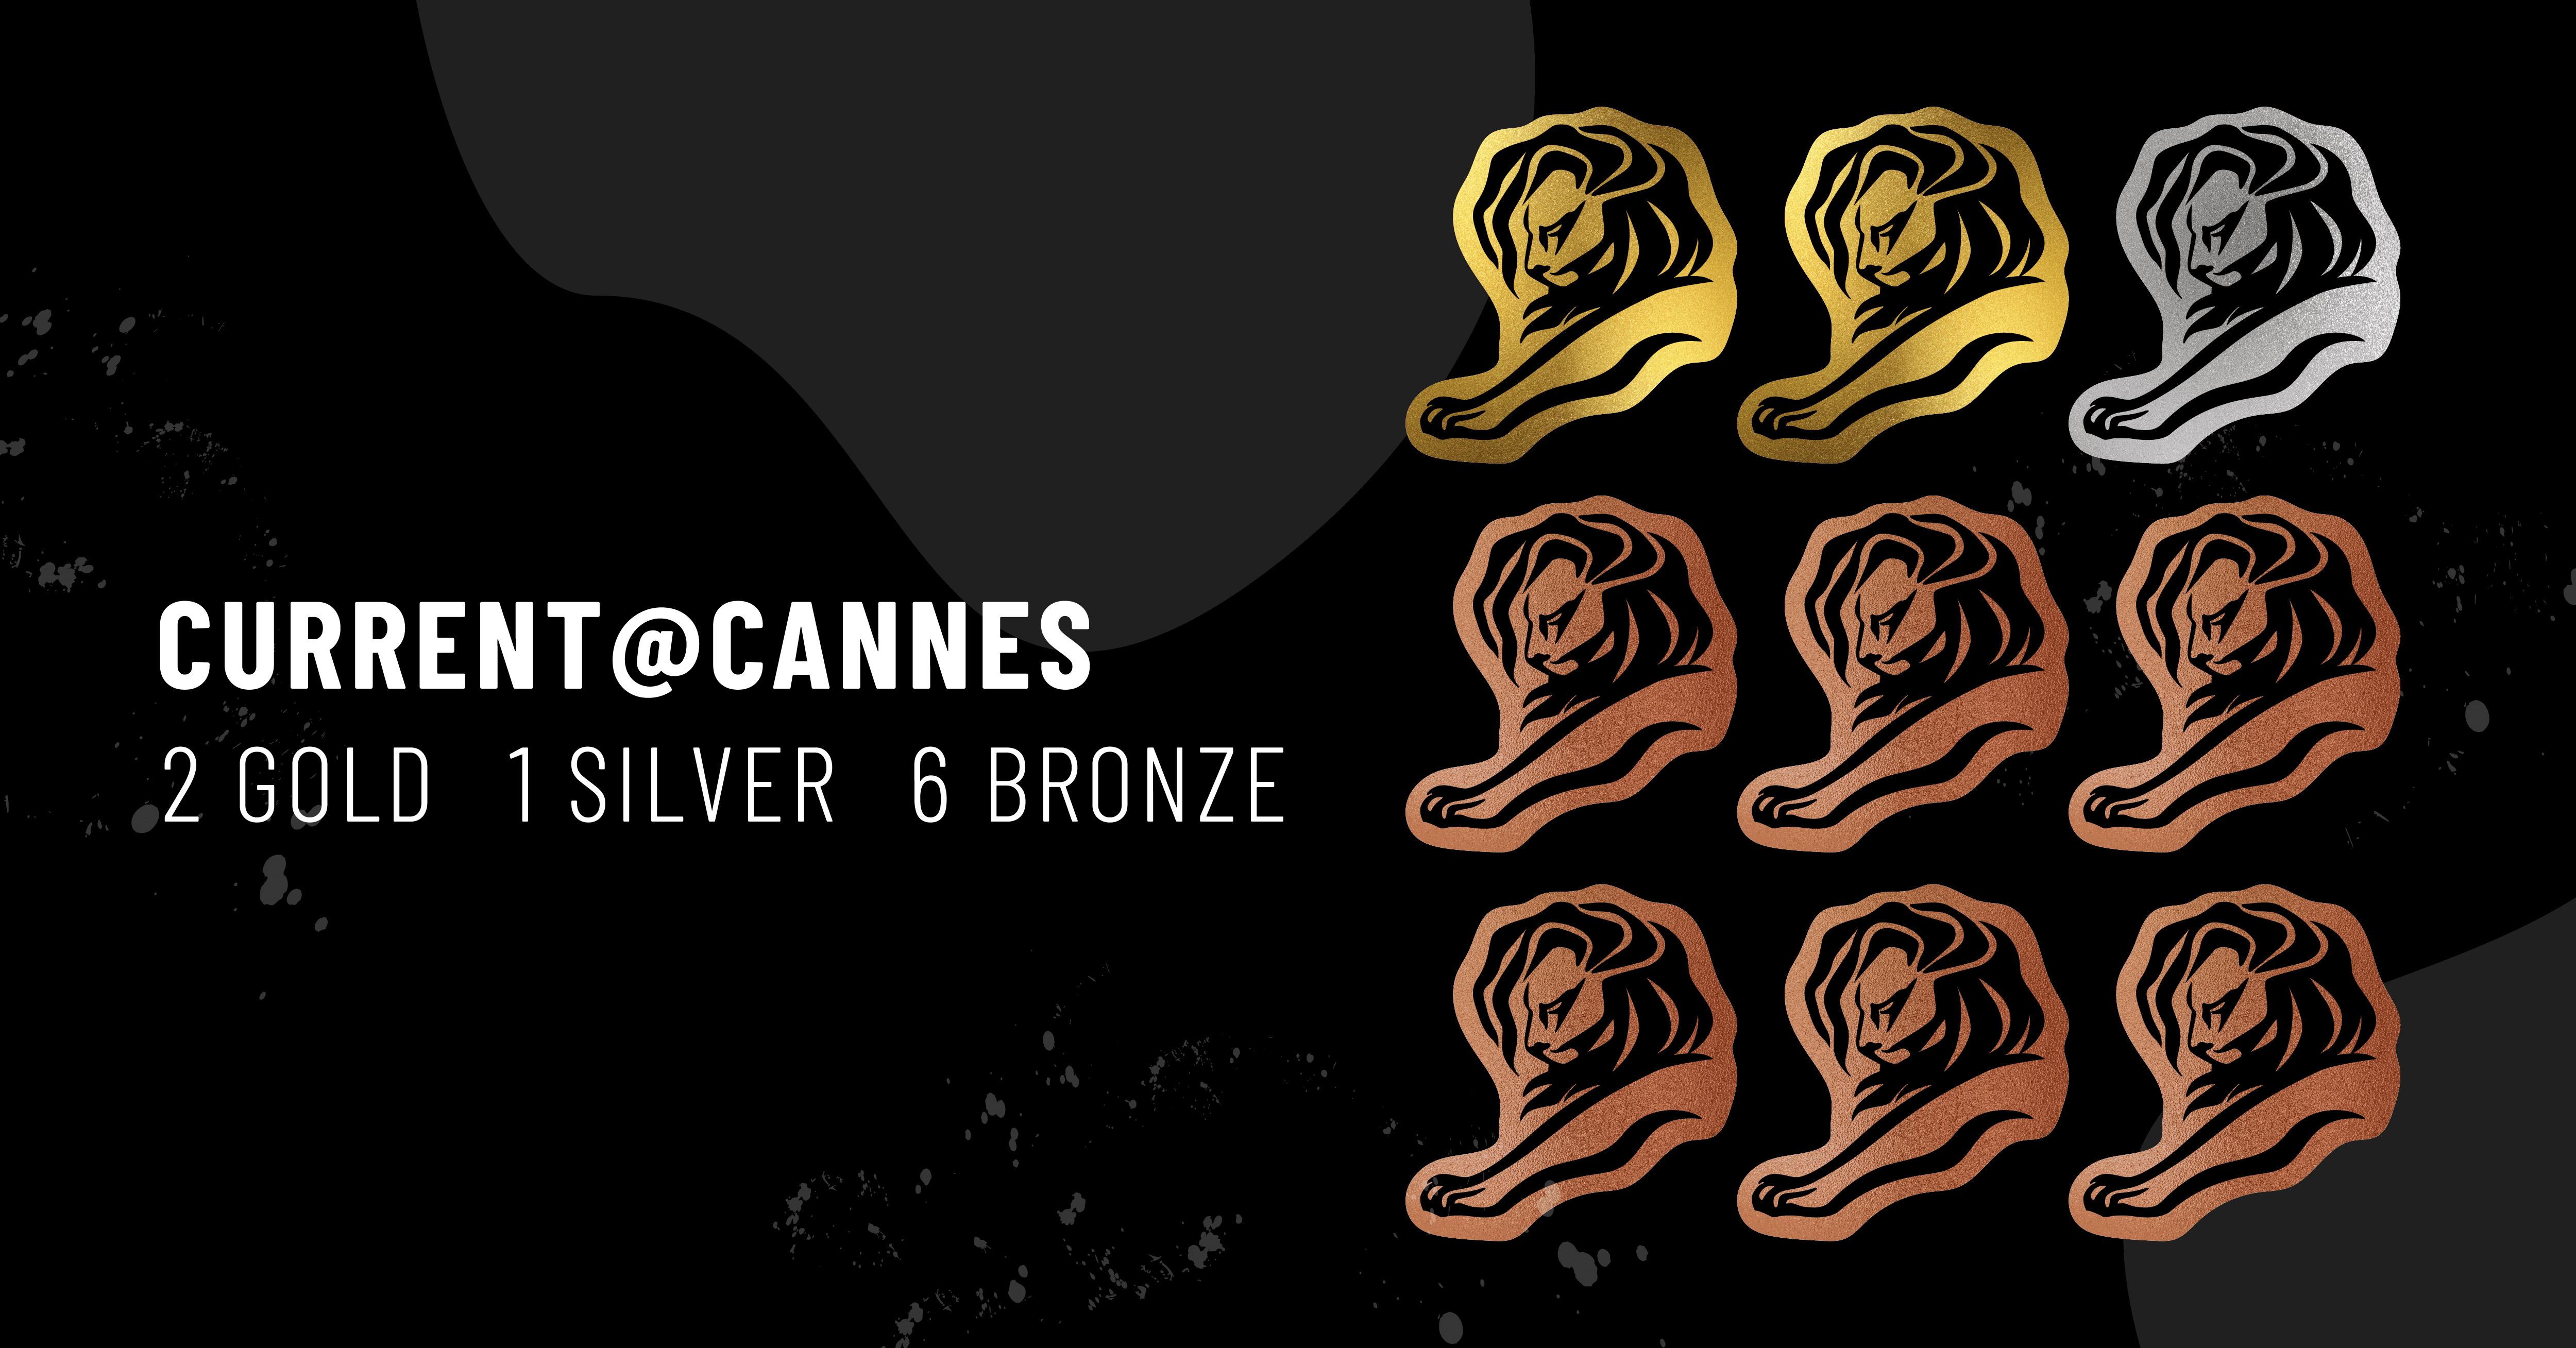 Das Bild zeigt 9 Cannes-Lions-Symbole mit Text, der lautet: Current @ Cannes - 2 Gold, 1 Silver, 6 Bronze.